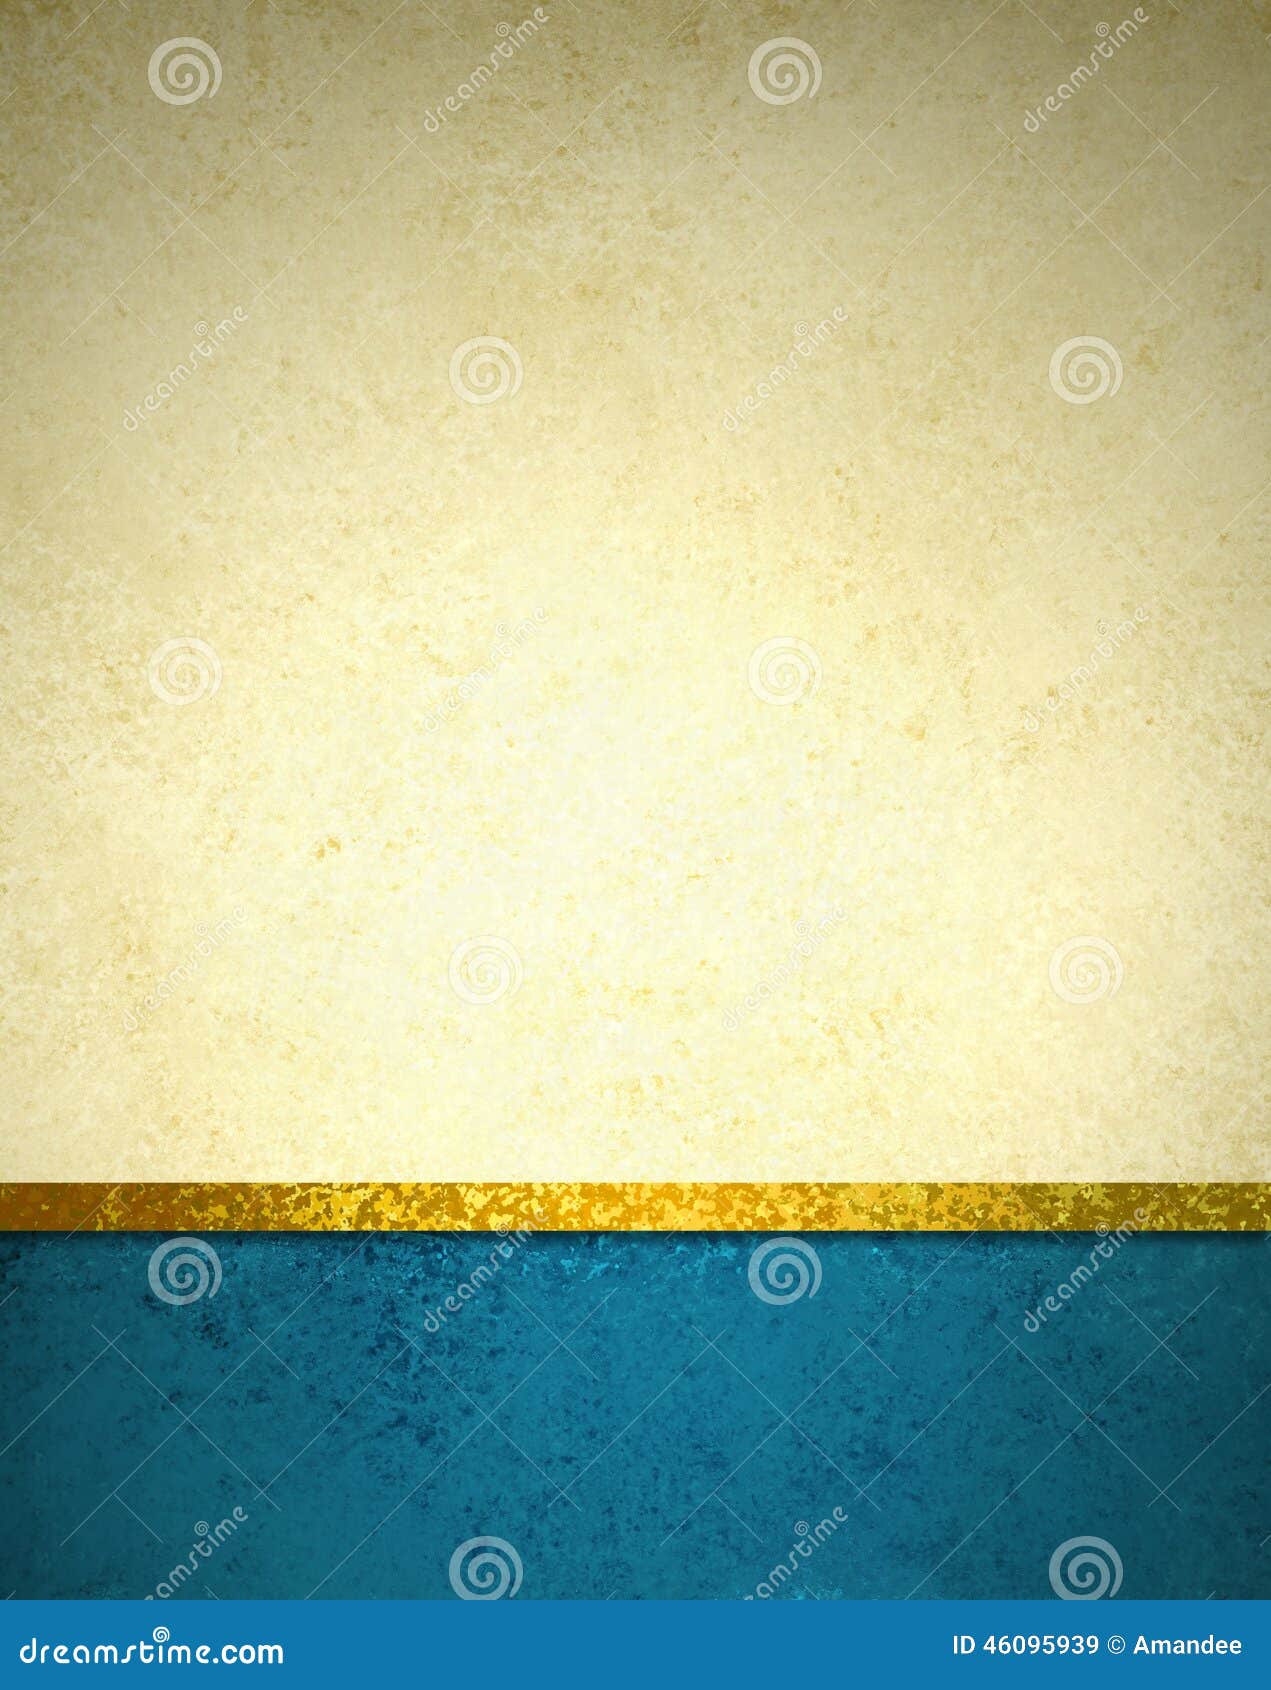 Gold Beige Background With Blue Footer Border, Gold Ribbon Trim, And Grunge  Vintage Texture Illustration 46095939 - Megapixl